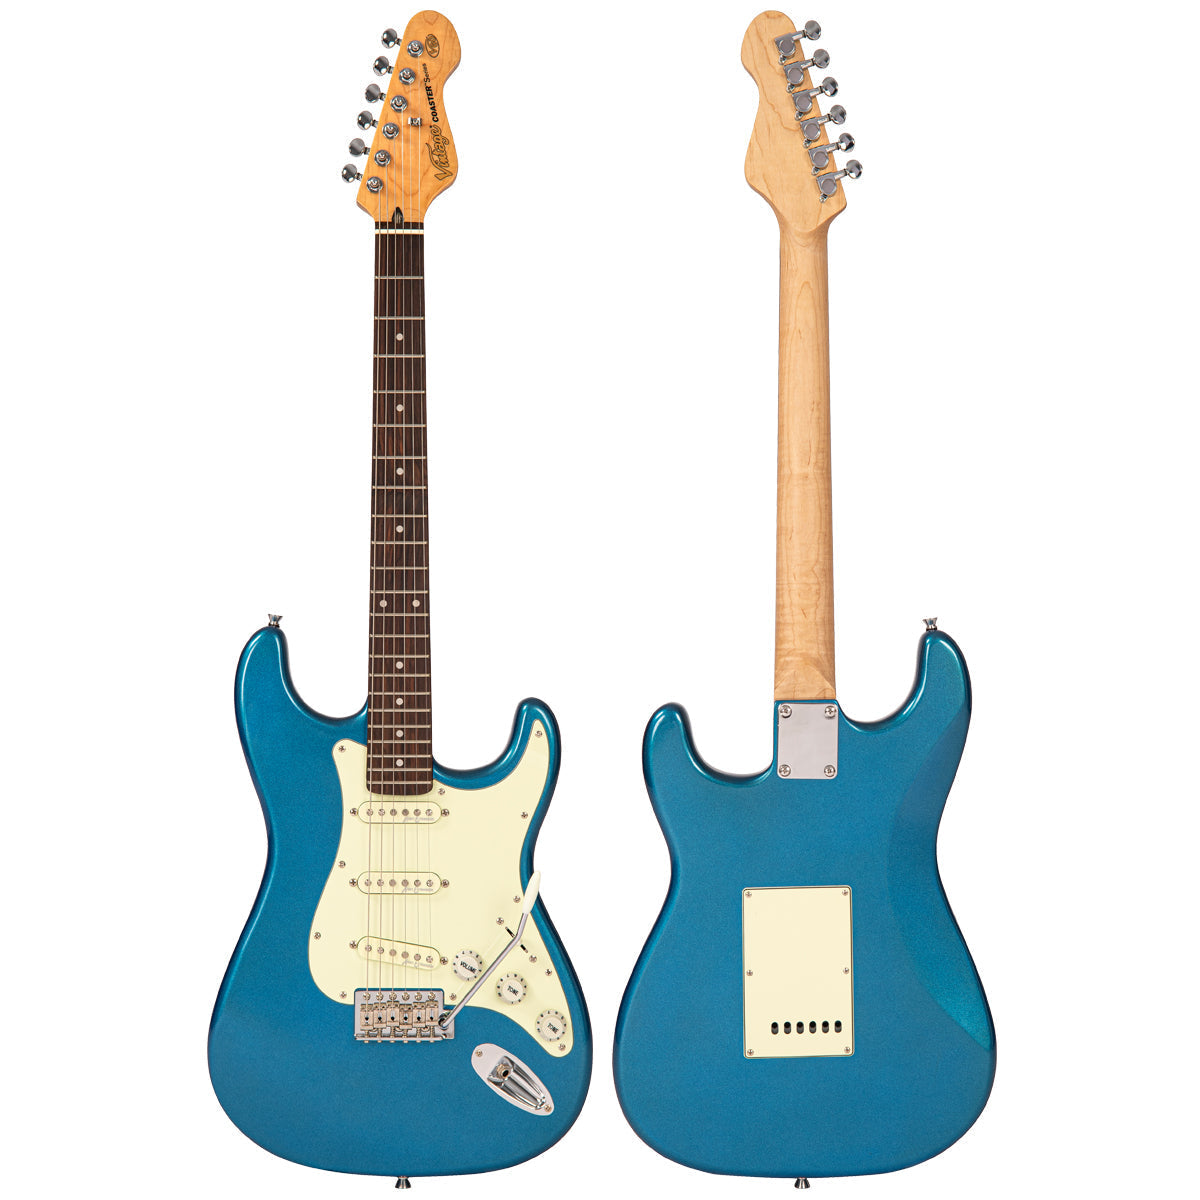 Vintage V60 Coaster Series Electric Guitar Pack ~ Candy Apple Blue, Electric Guitar for sale at Richards Guitars.